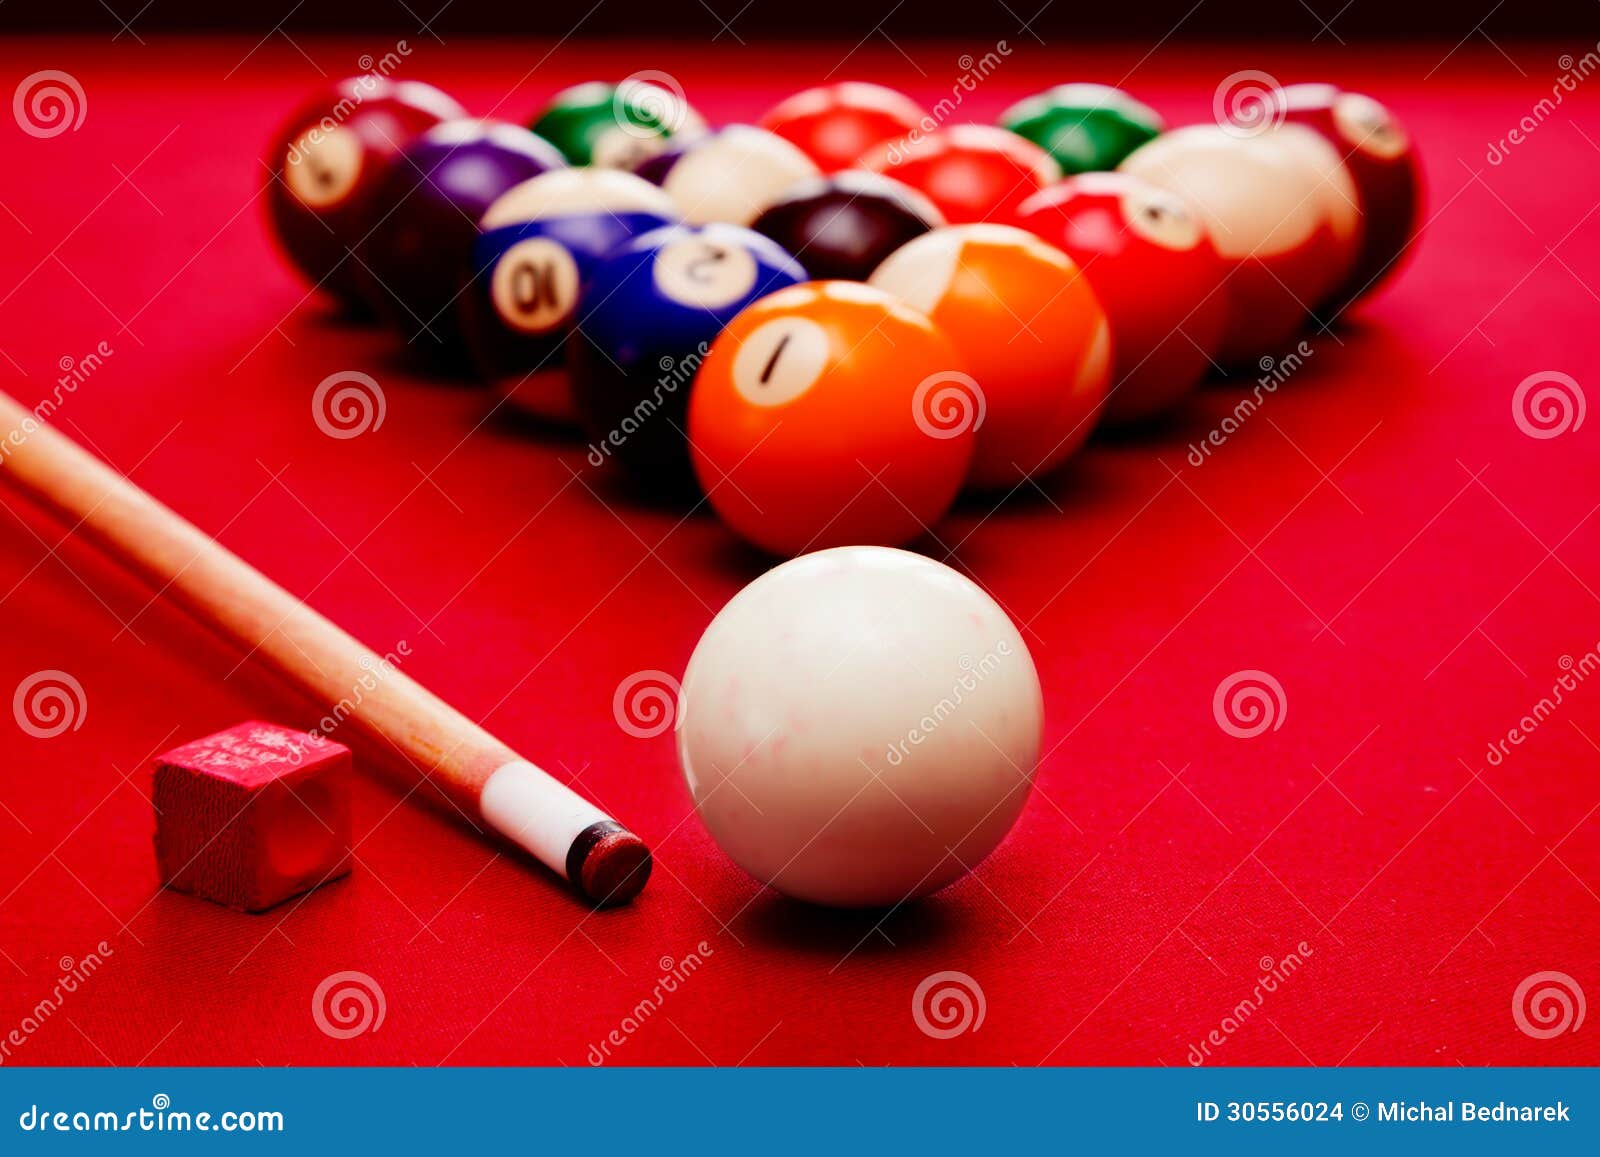 billards pool game. cue ball, cue color balls in triangle, chalk